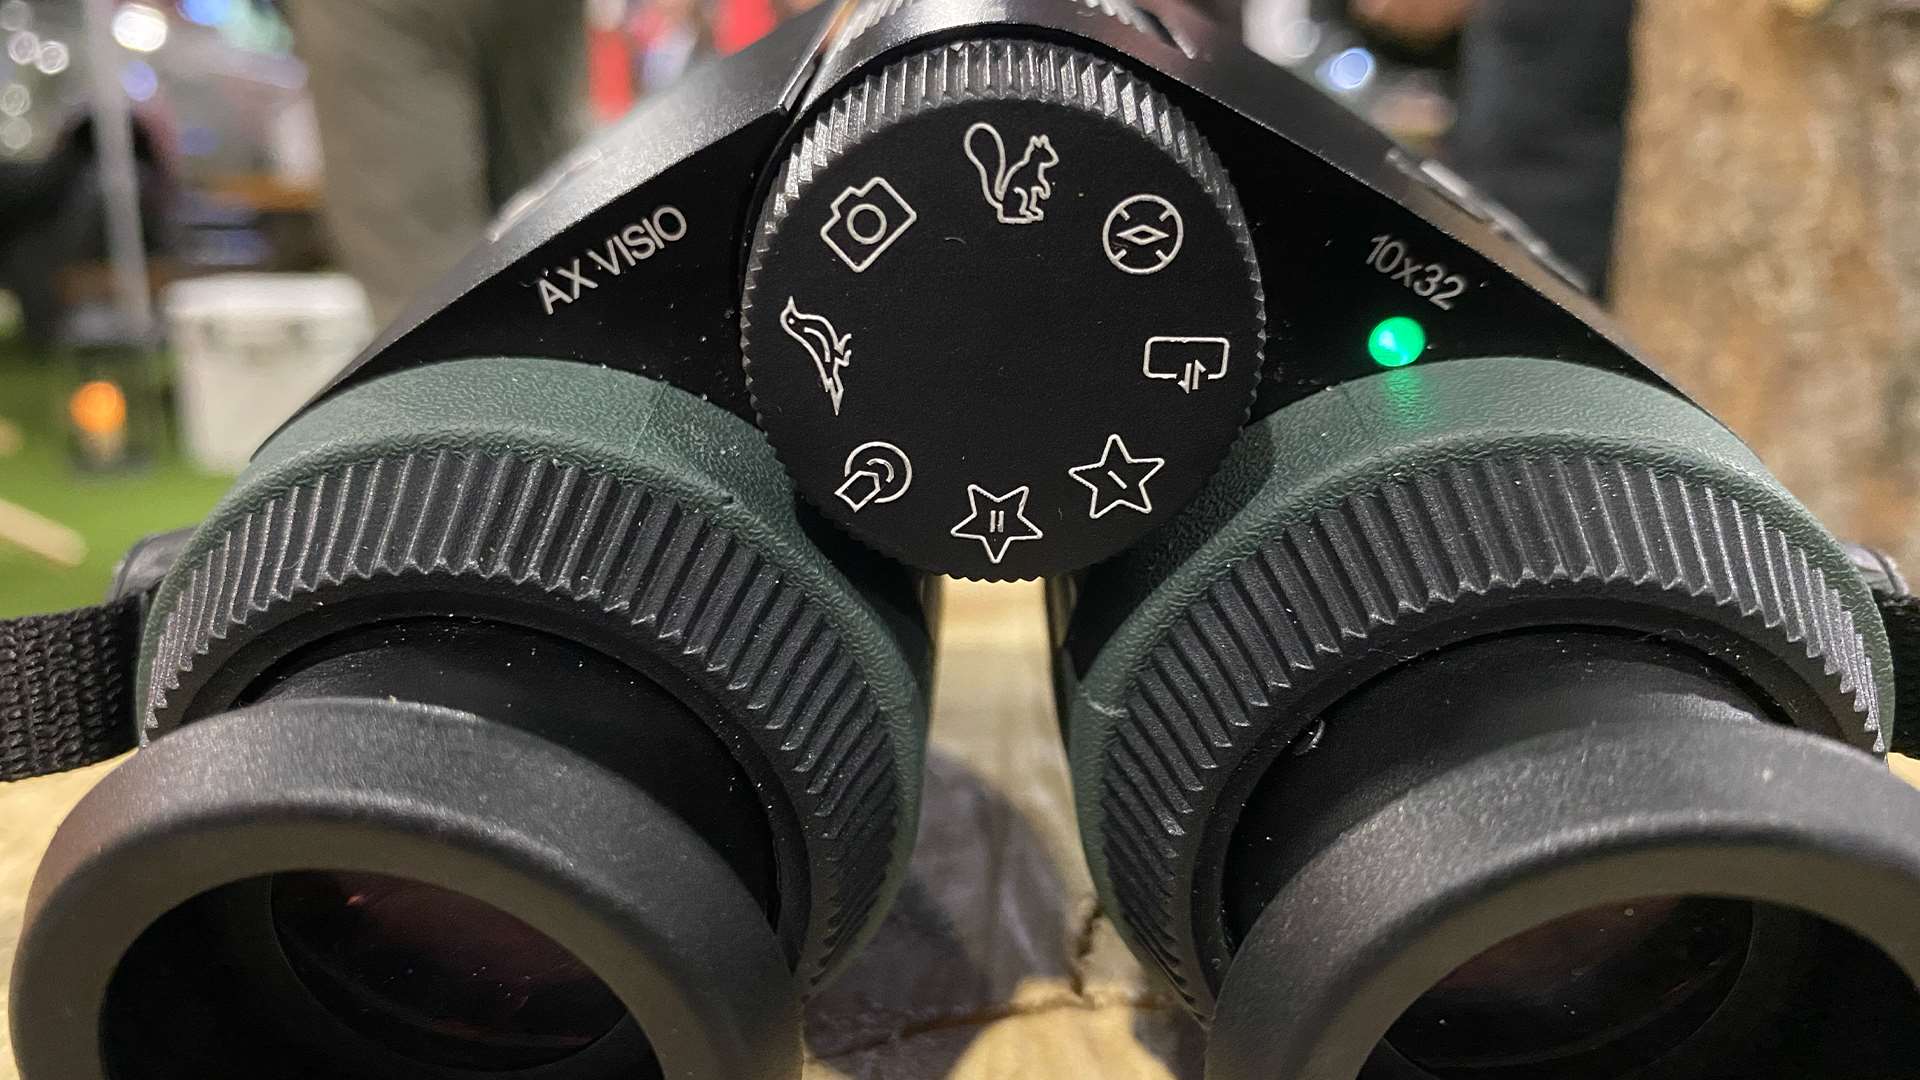 AX Visio binoculars